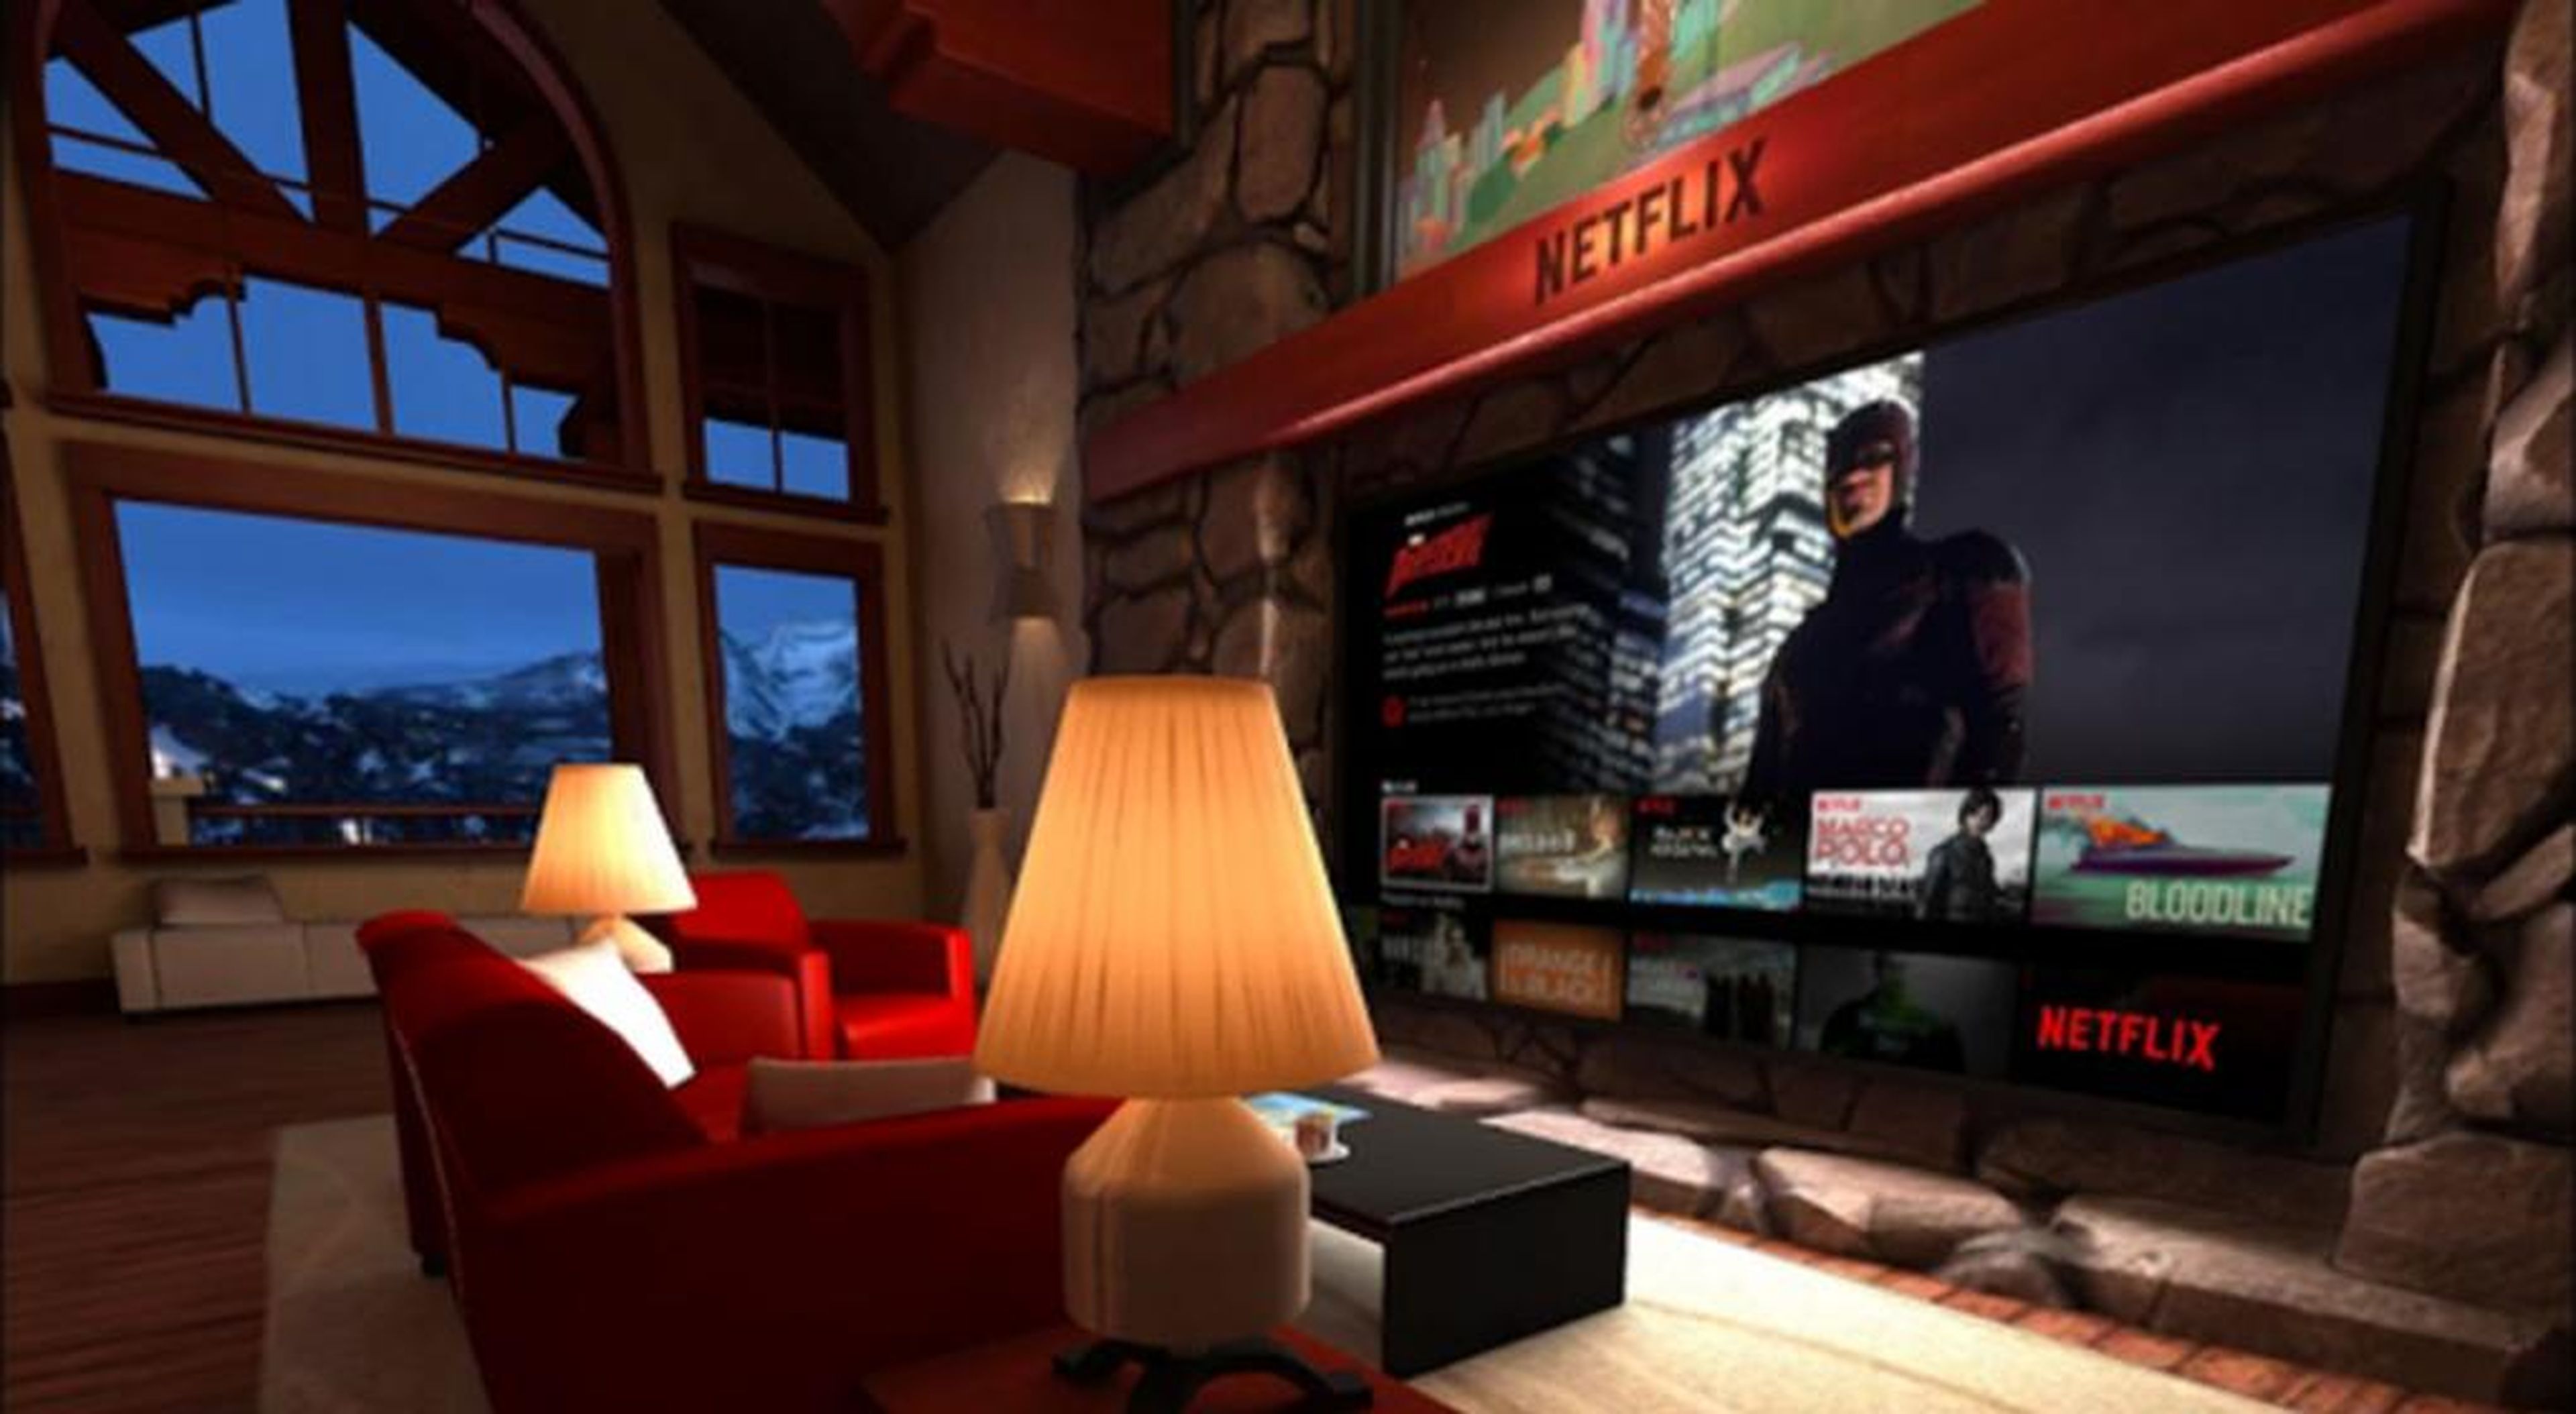 Netflix realidad virtual - Google Pixel